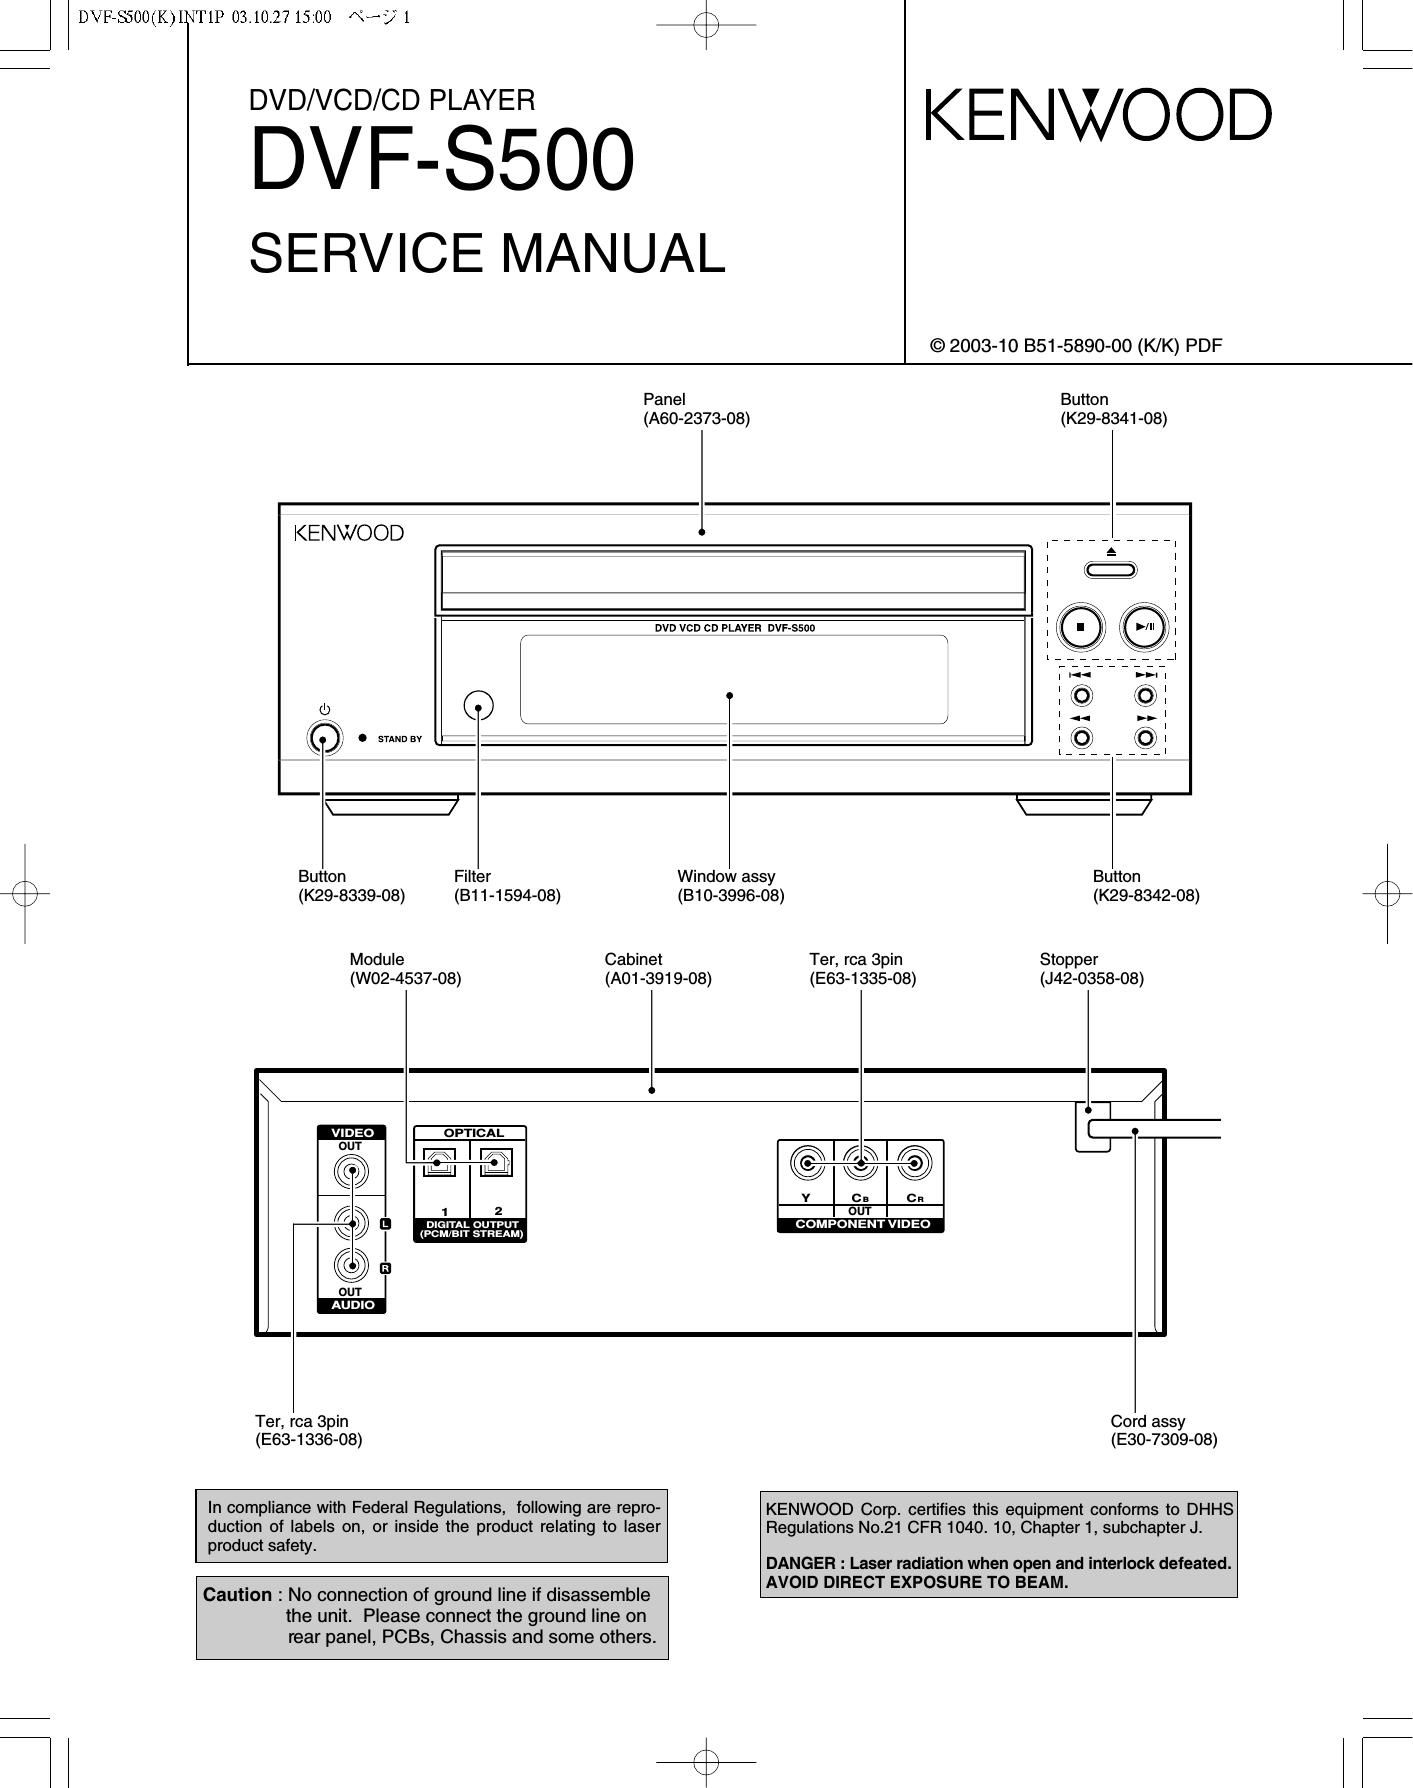 Kenwood DVFS 500 Service Manual